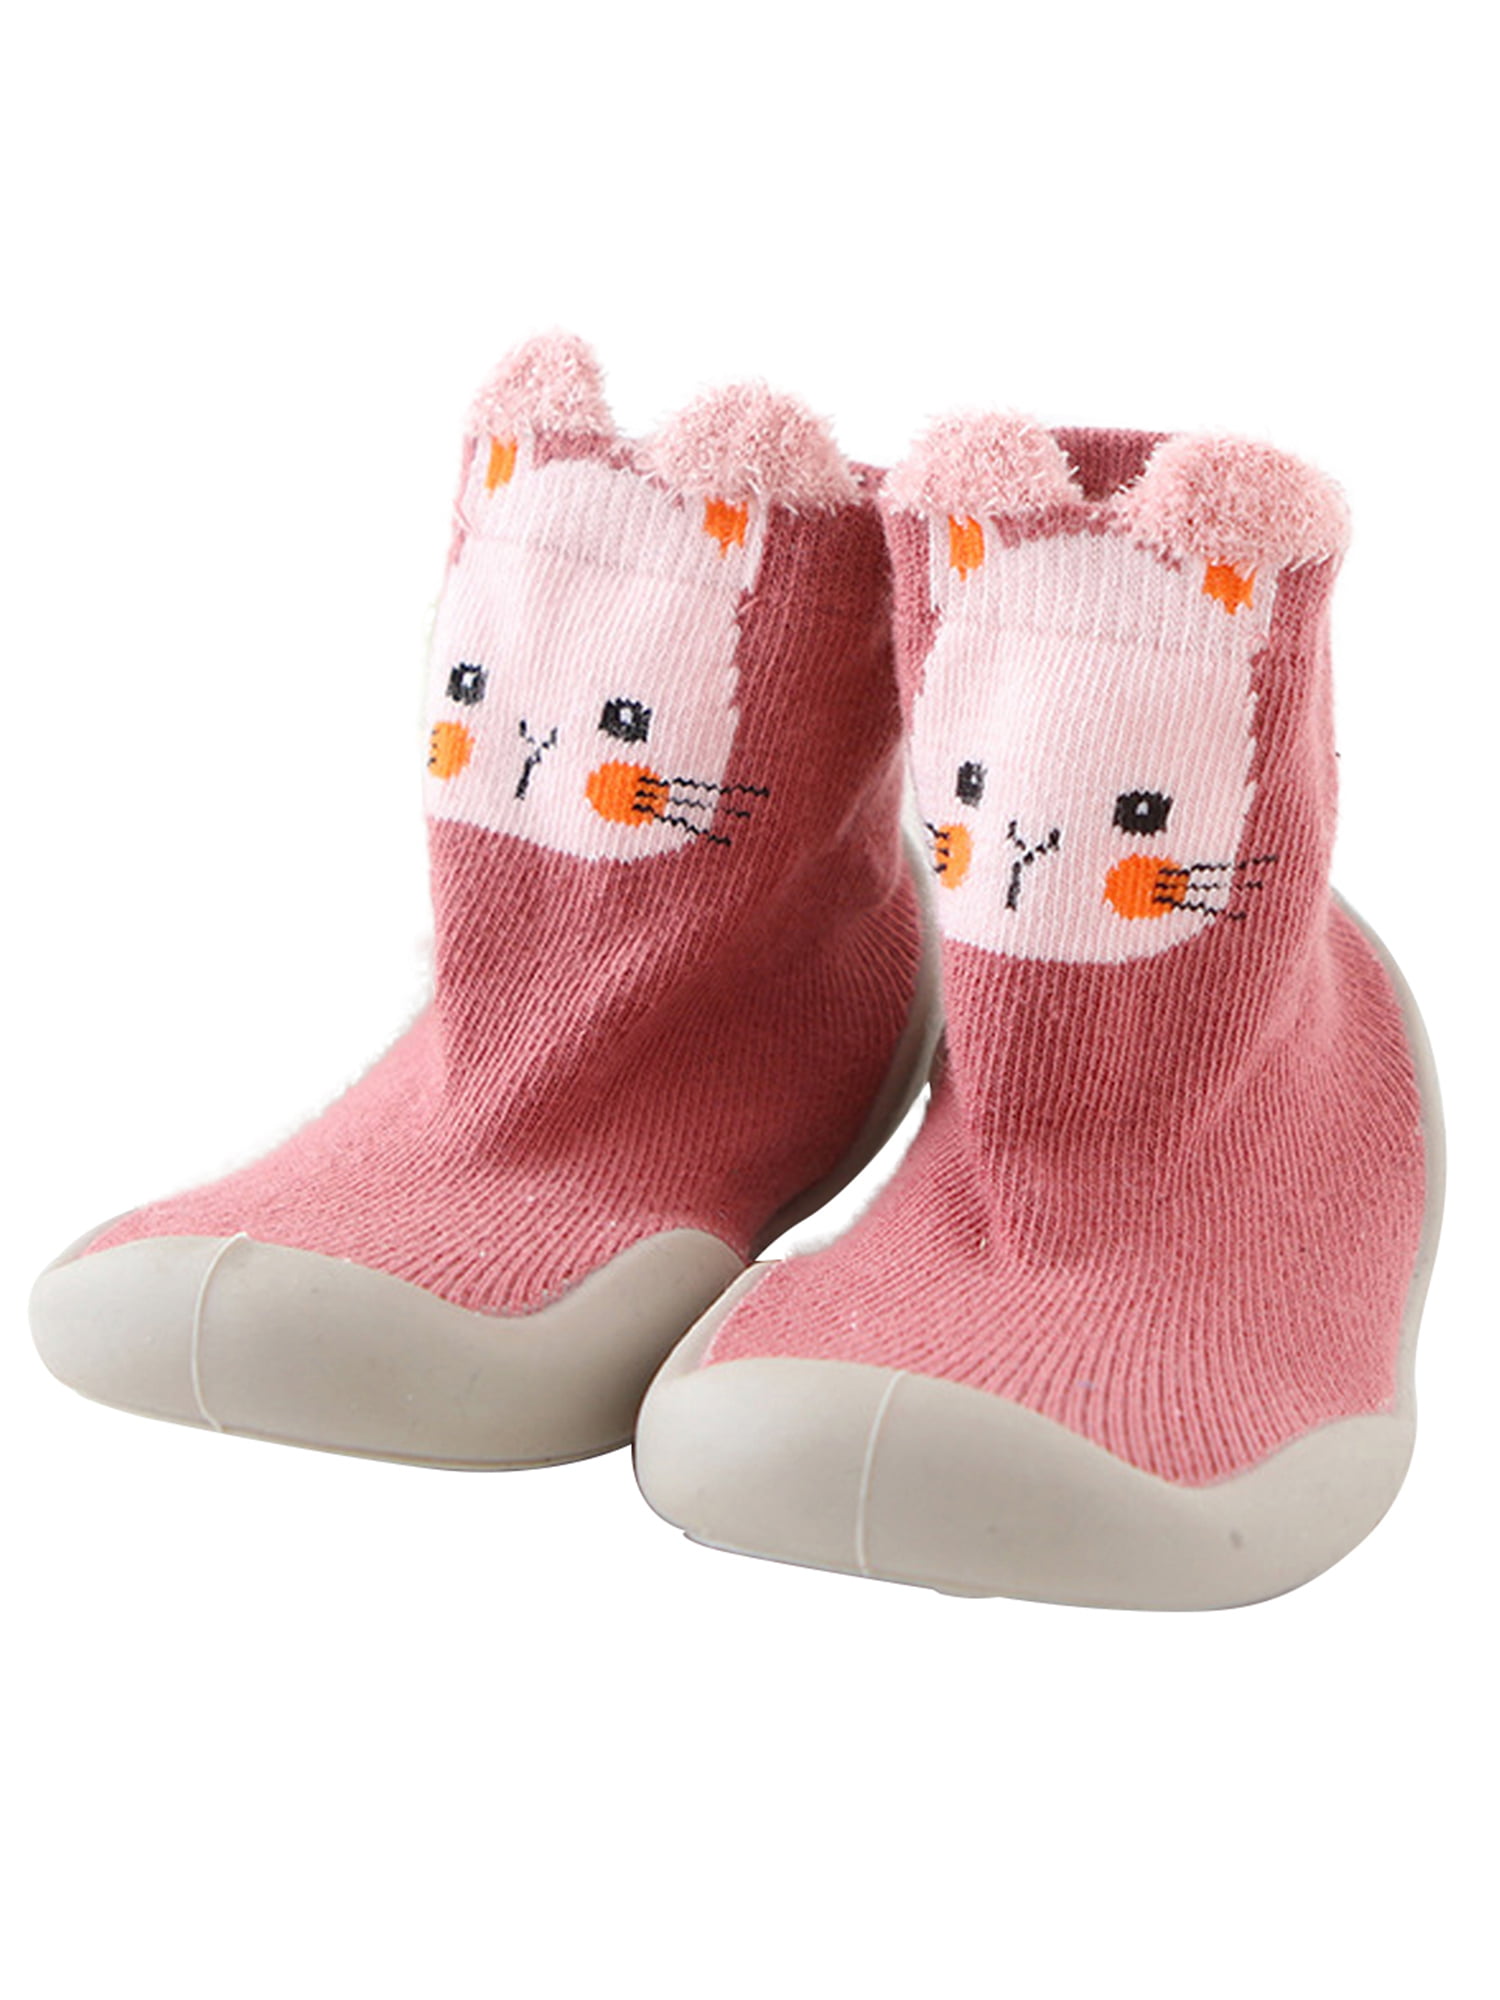 Baby Girl Boy Anti-slip Socks Cartoon Newborn Slipper Shoes Boots 0-18 Months 